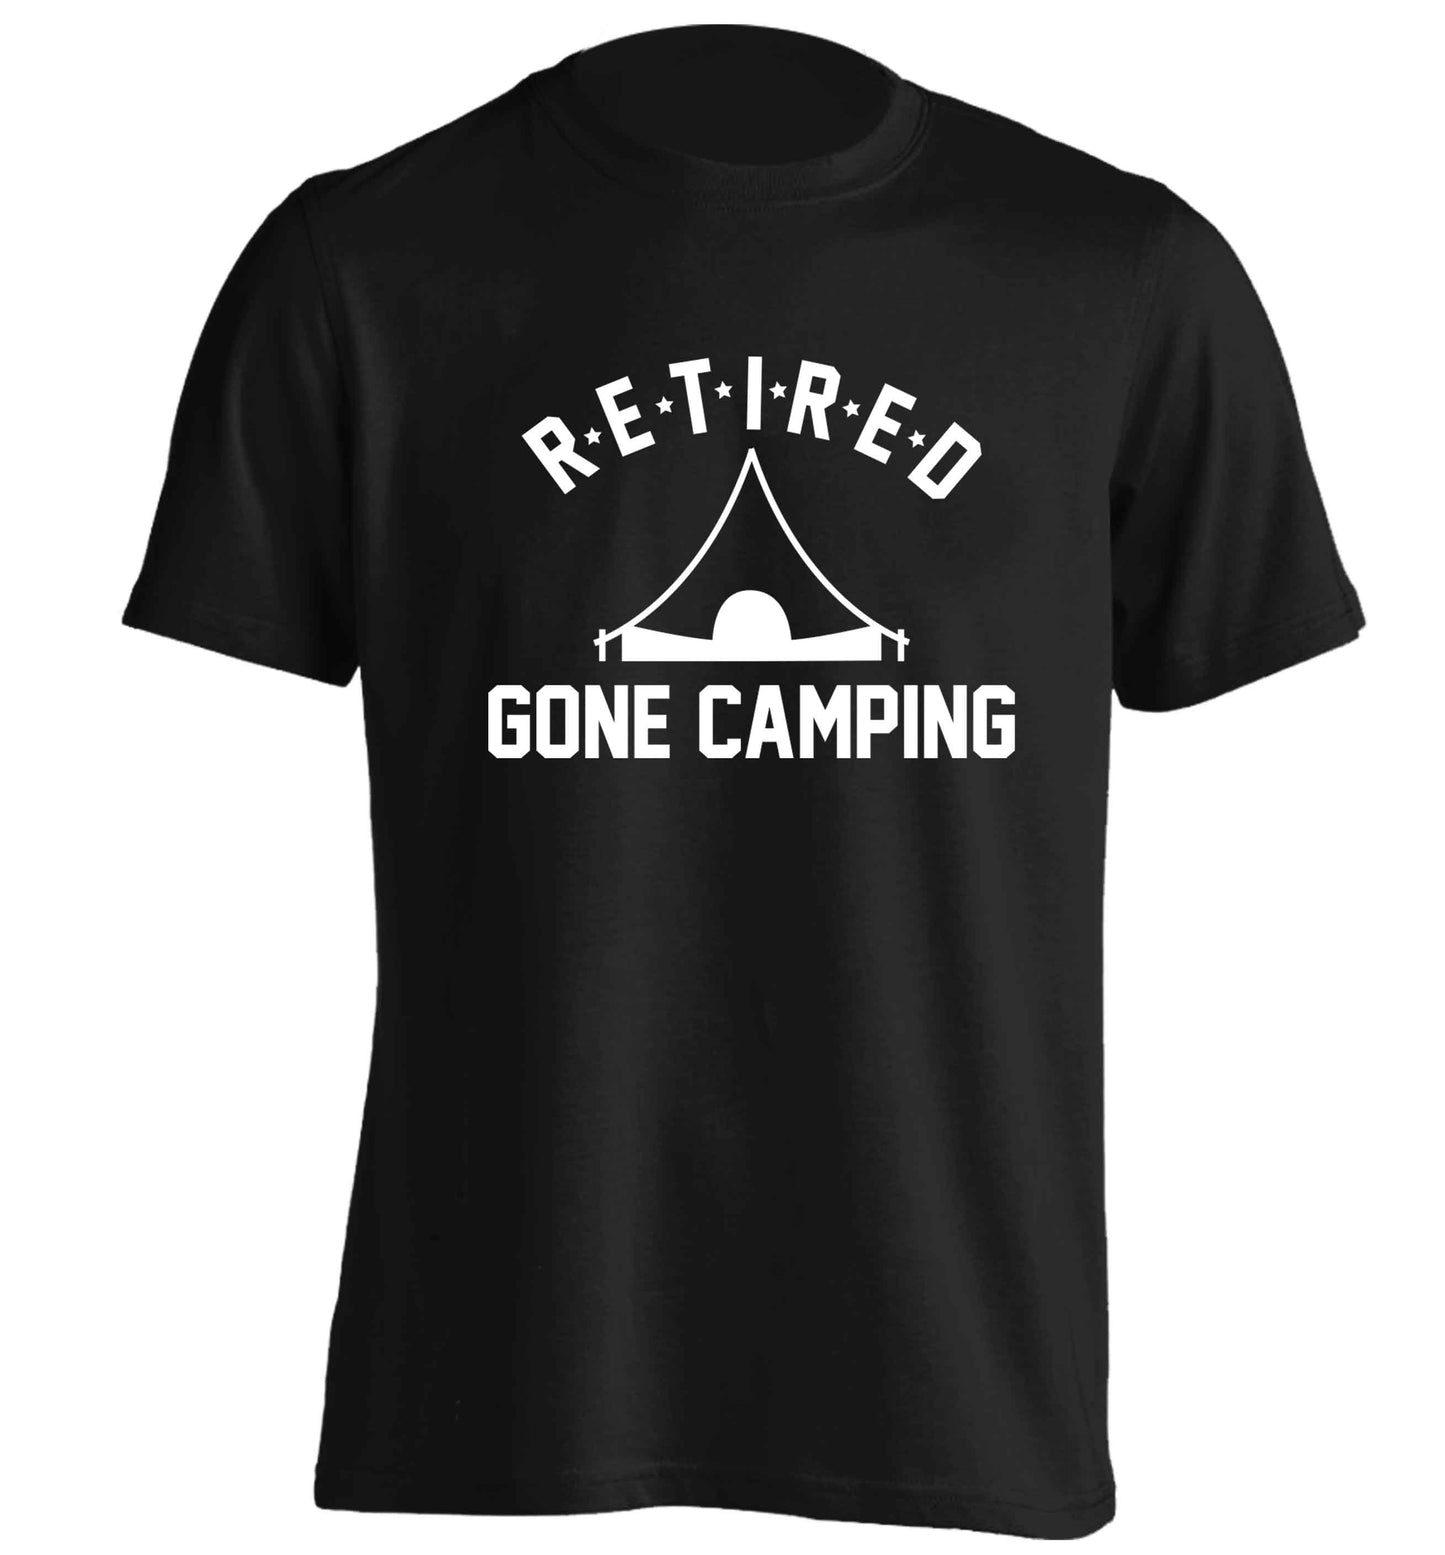 Retired gone camping adults unisex black Tshirt 2XL